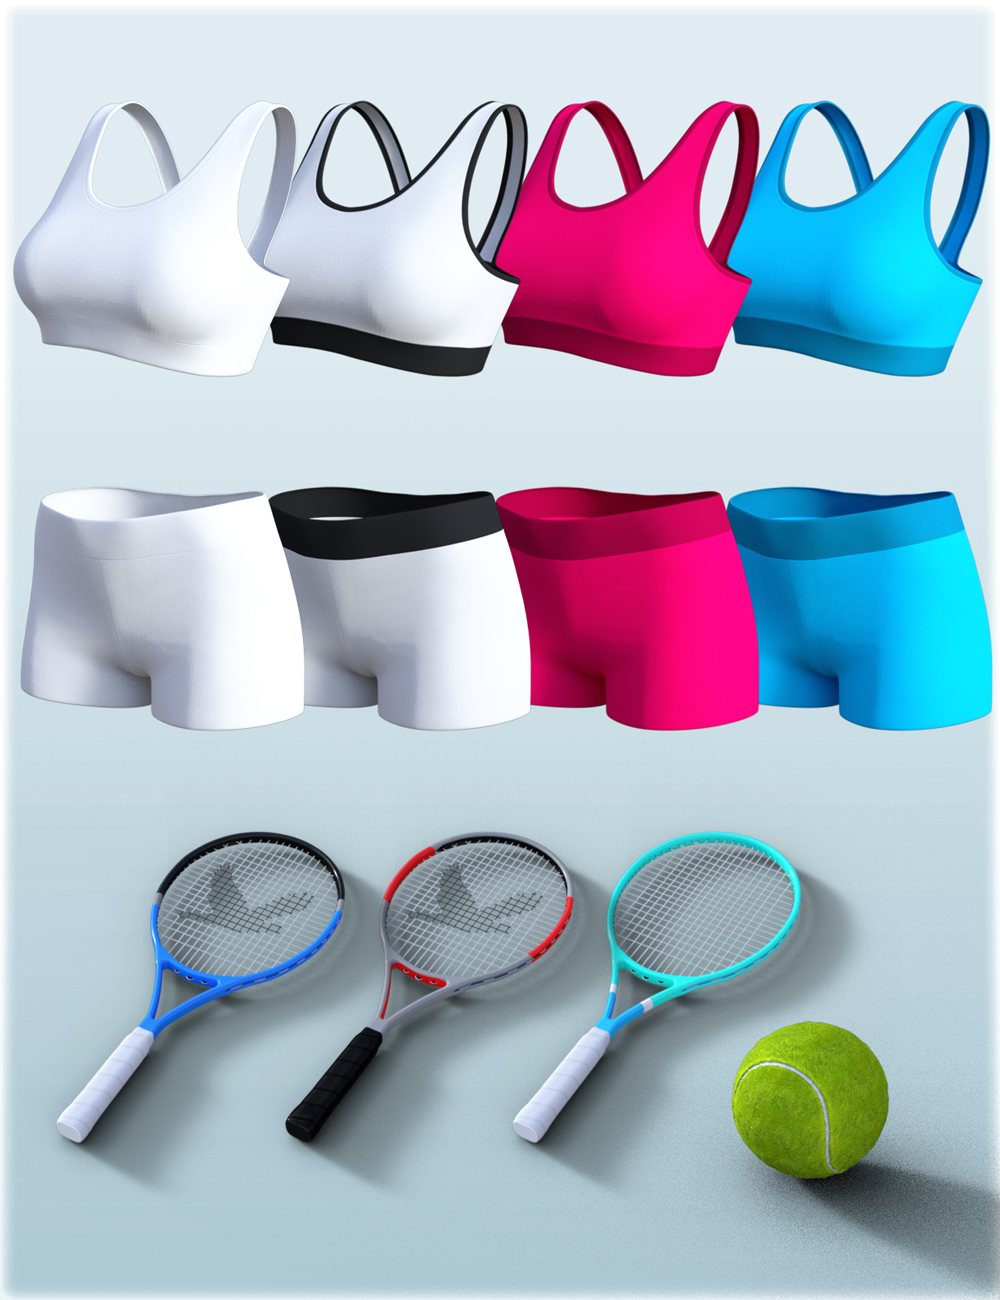 H&C Tennis Wear Set for Genesis 3 Female(s) by: IH Kang, 3D Models by Daz 3D